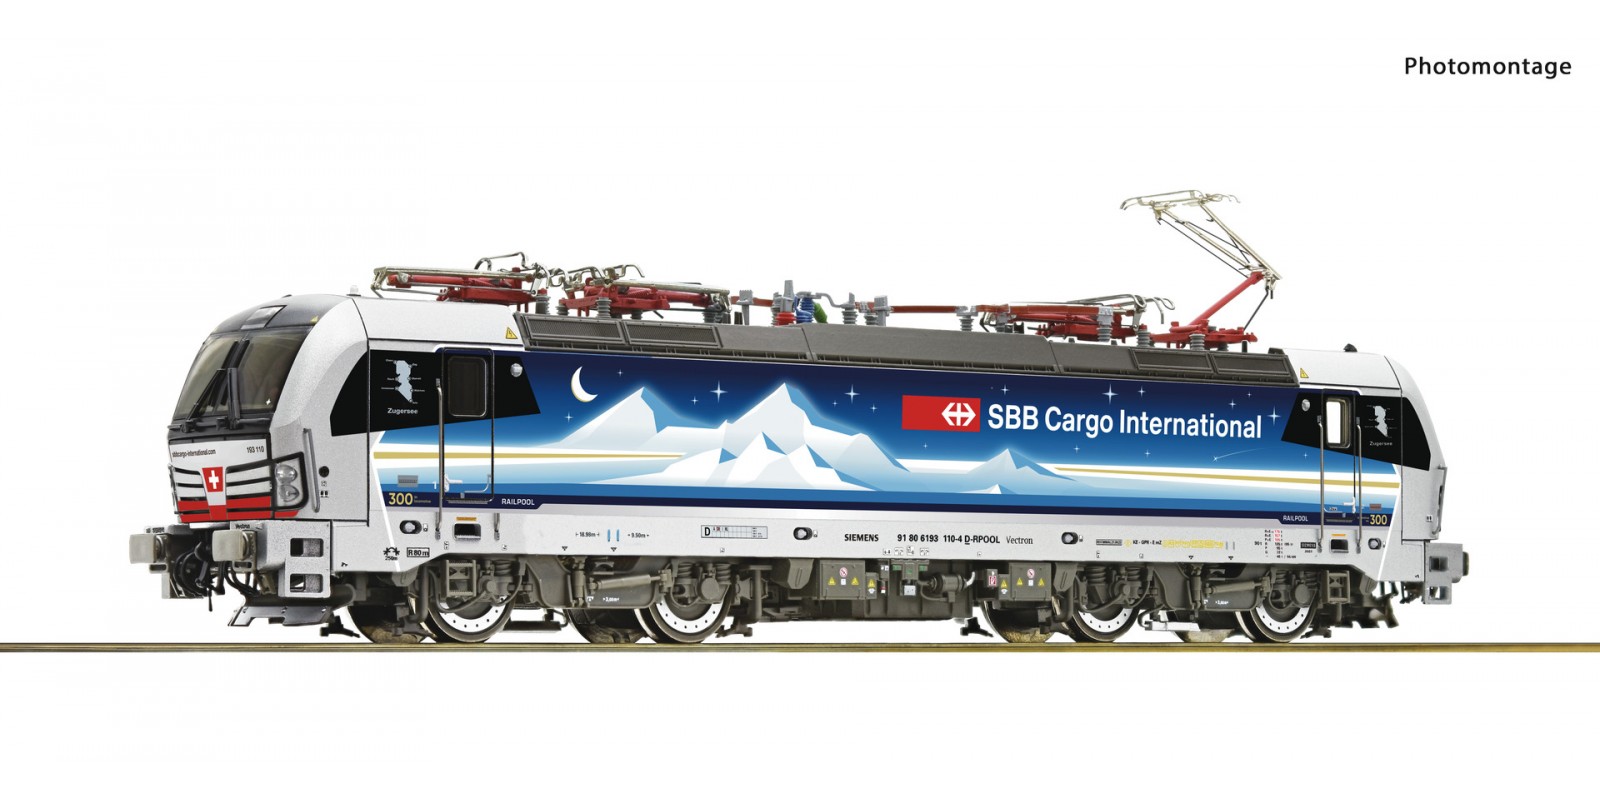 RO7500038 Electric locomotive 193 1 10-4  Goldpiercer , SBB C